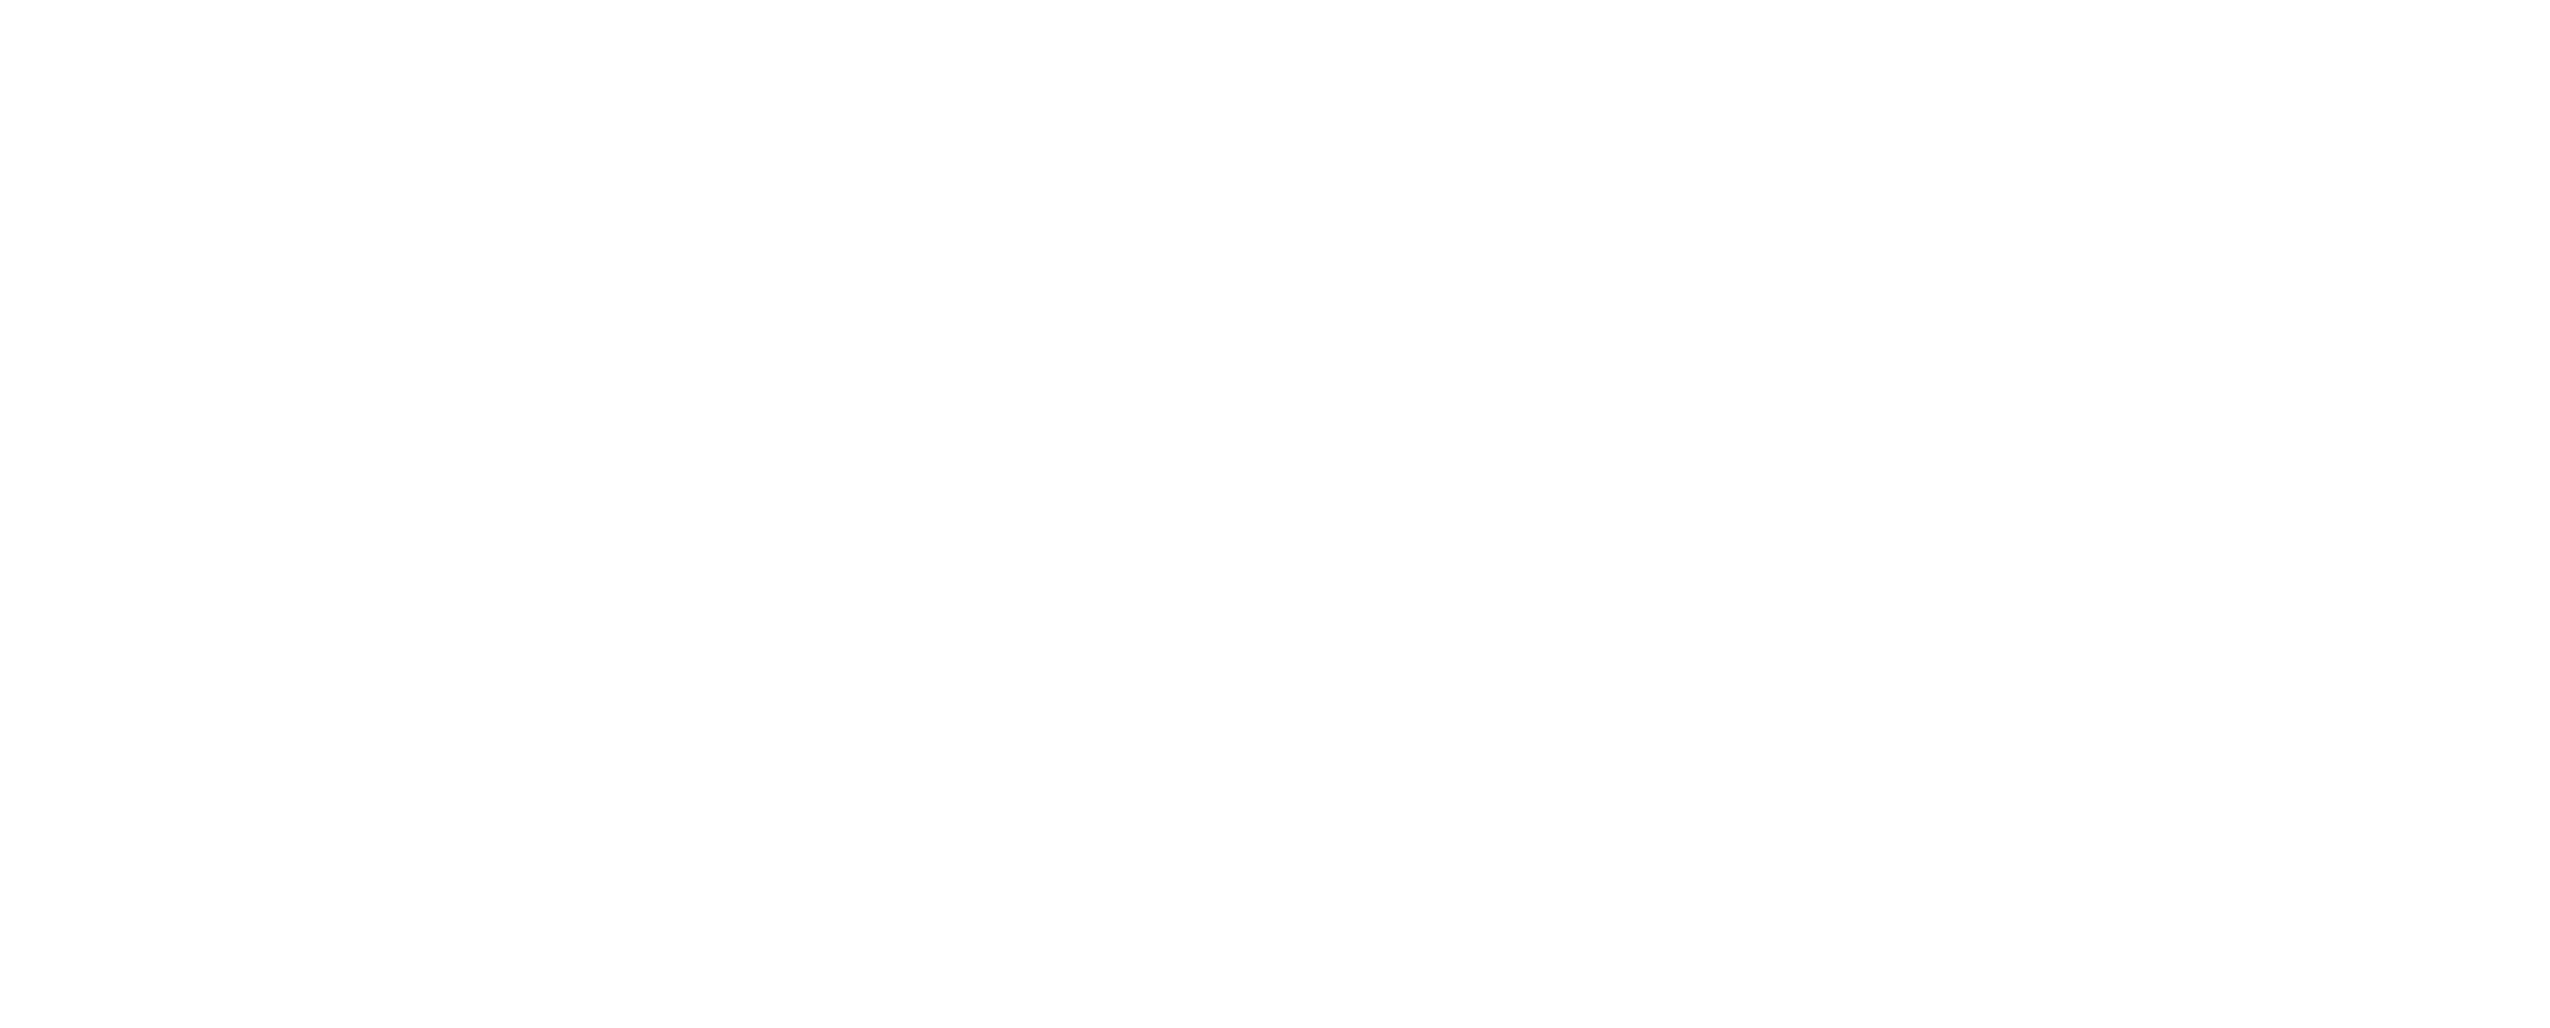 BaysEdge